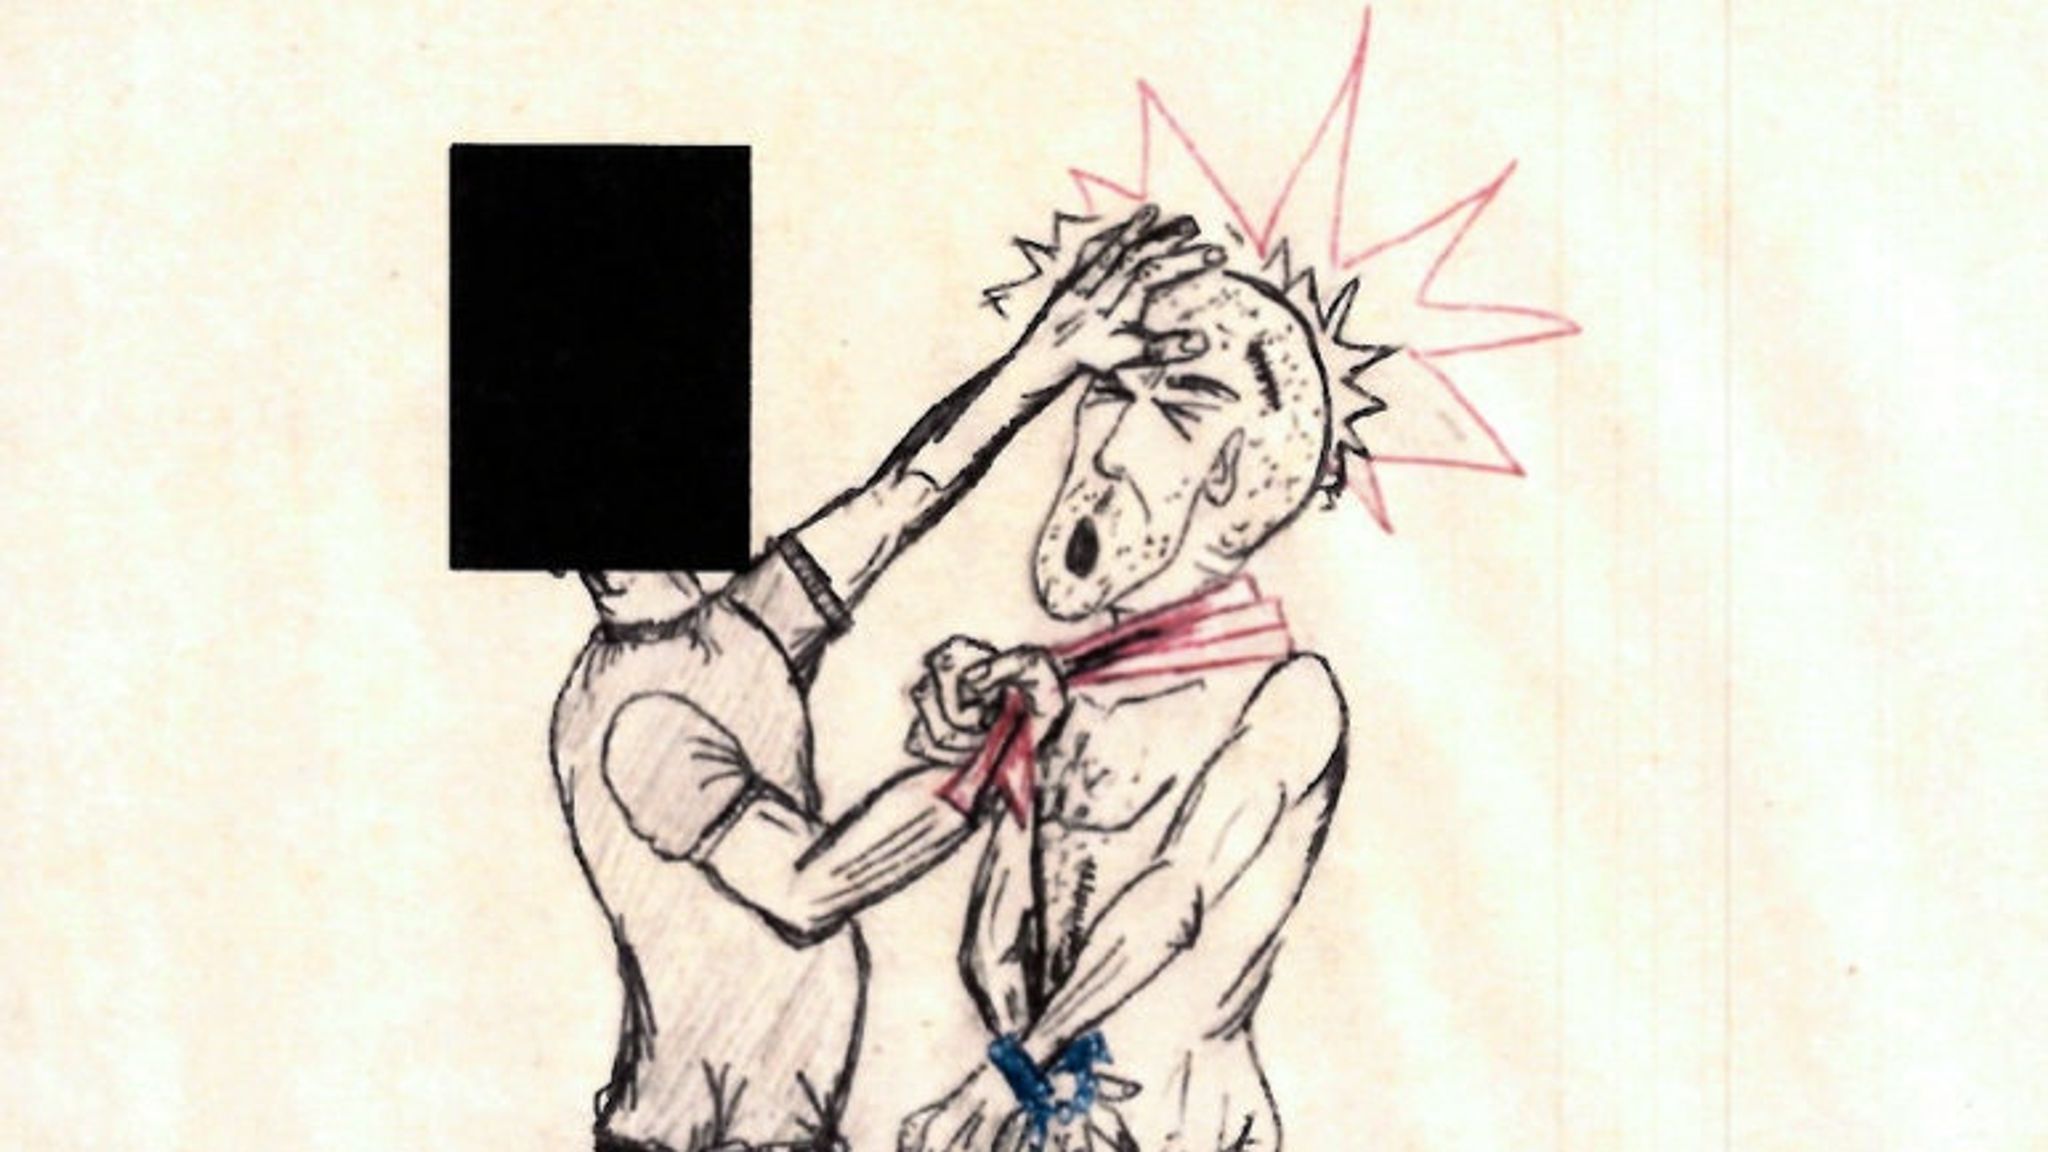 Guantanamo Bay prisoner's sketches detail CIA 'torture' at black site